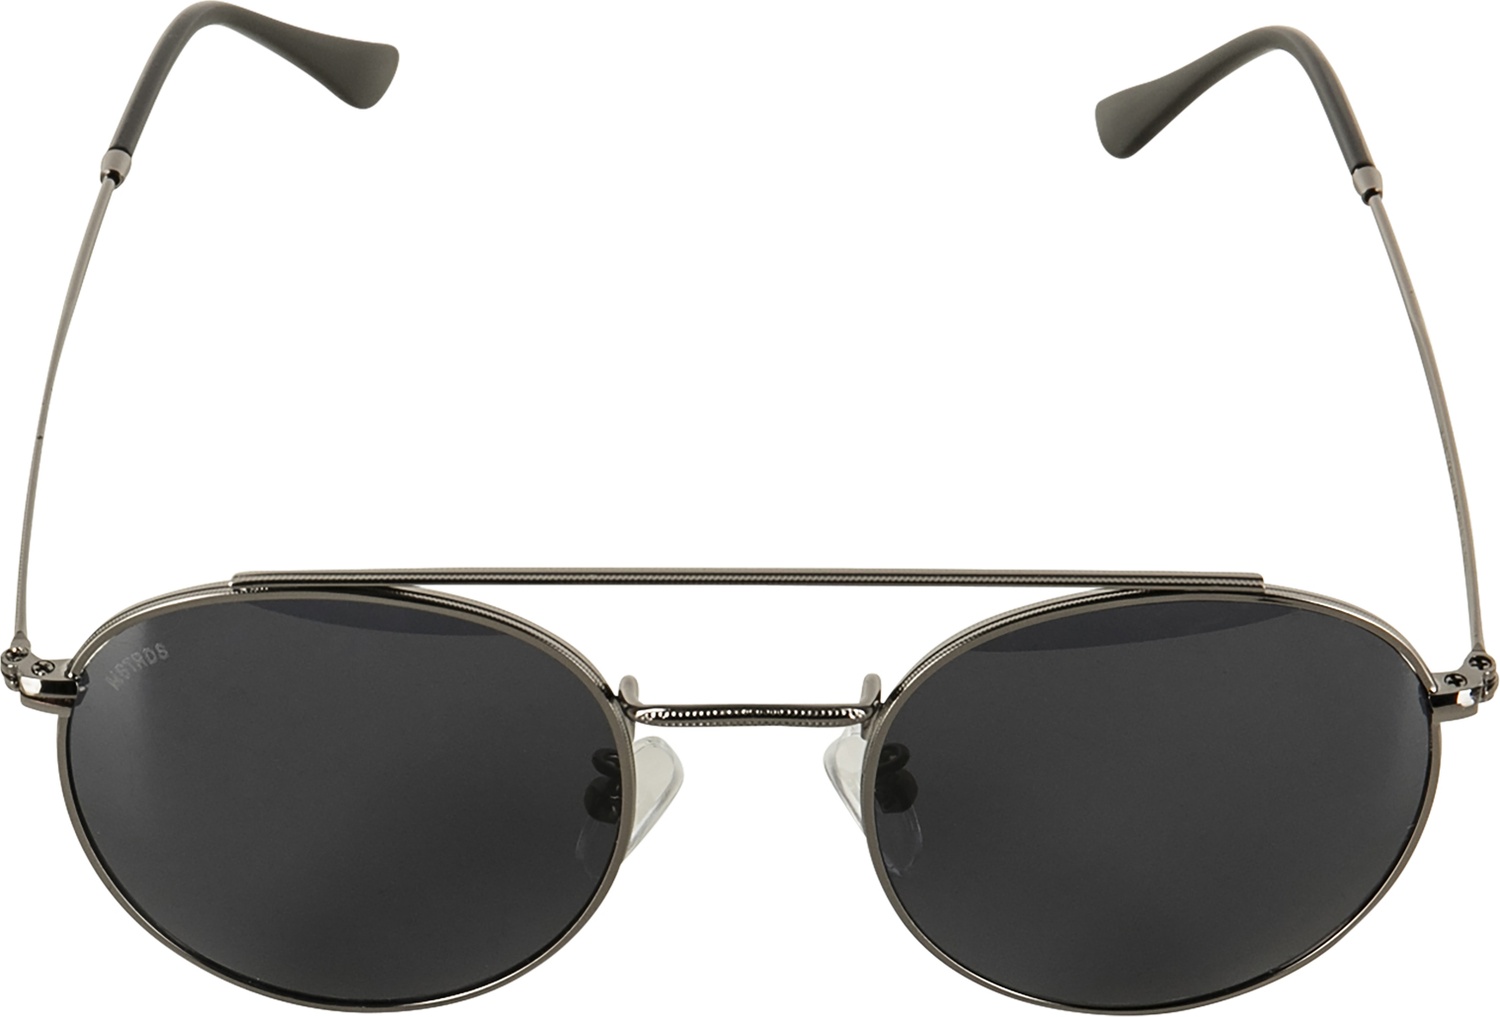 MSTRDS Sunglasses Sunglasses August Gunmetal/Black | Sun Glasses | Men |  Lifestyle